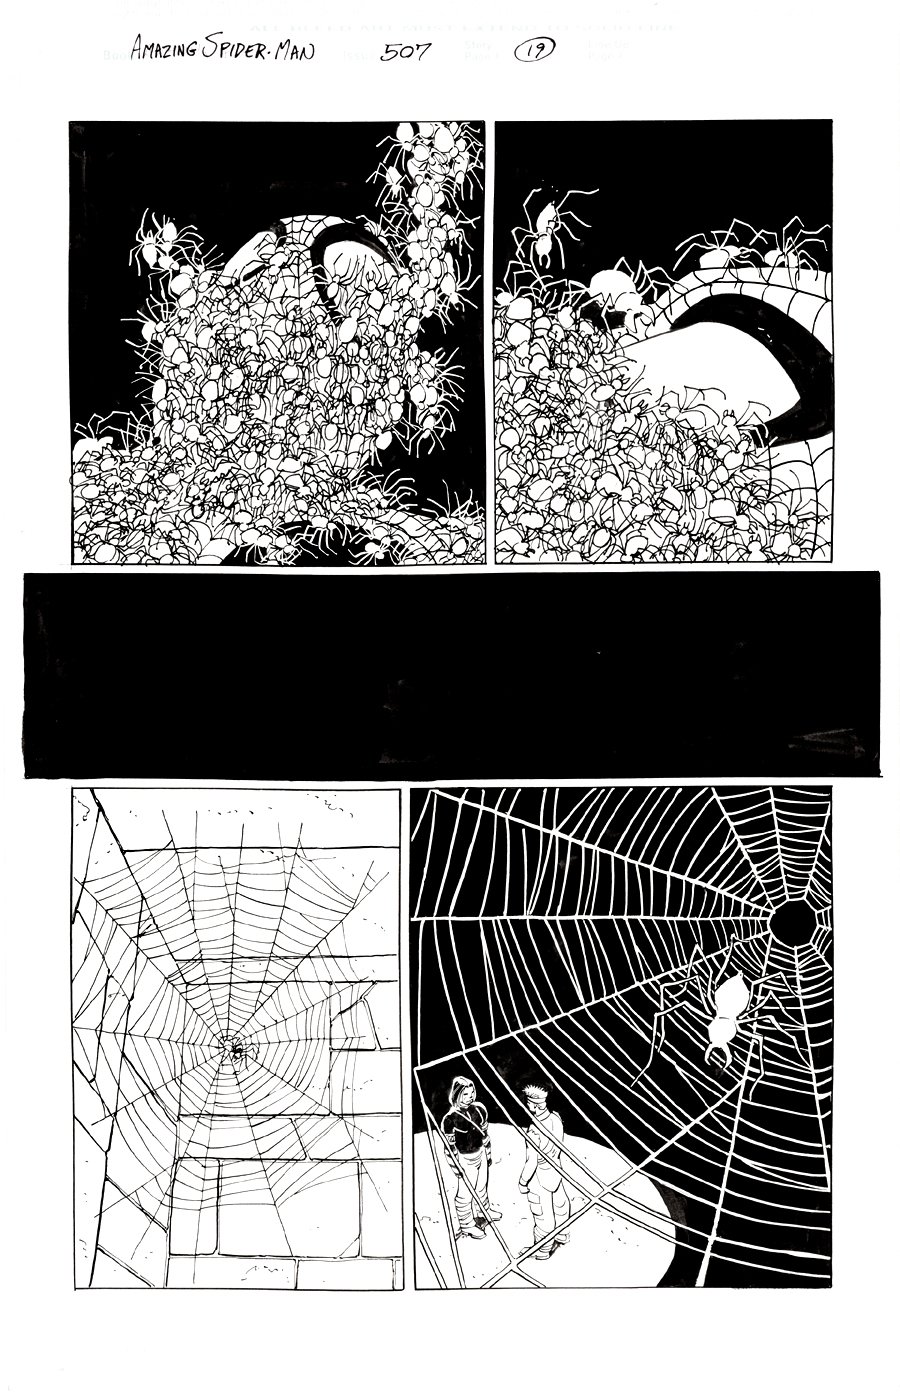 Image of Amazing Spider-Man #507 p 19 (SPIDER-MAN REVISITS HIS ORIGIN AS SPIDERS ENVELOPE HIM!) 2004